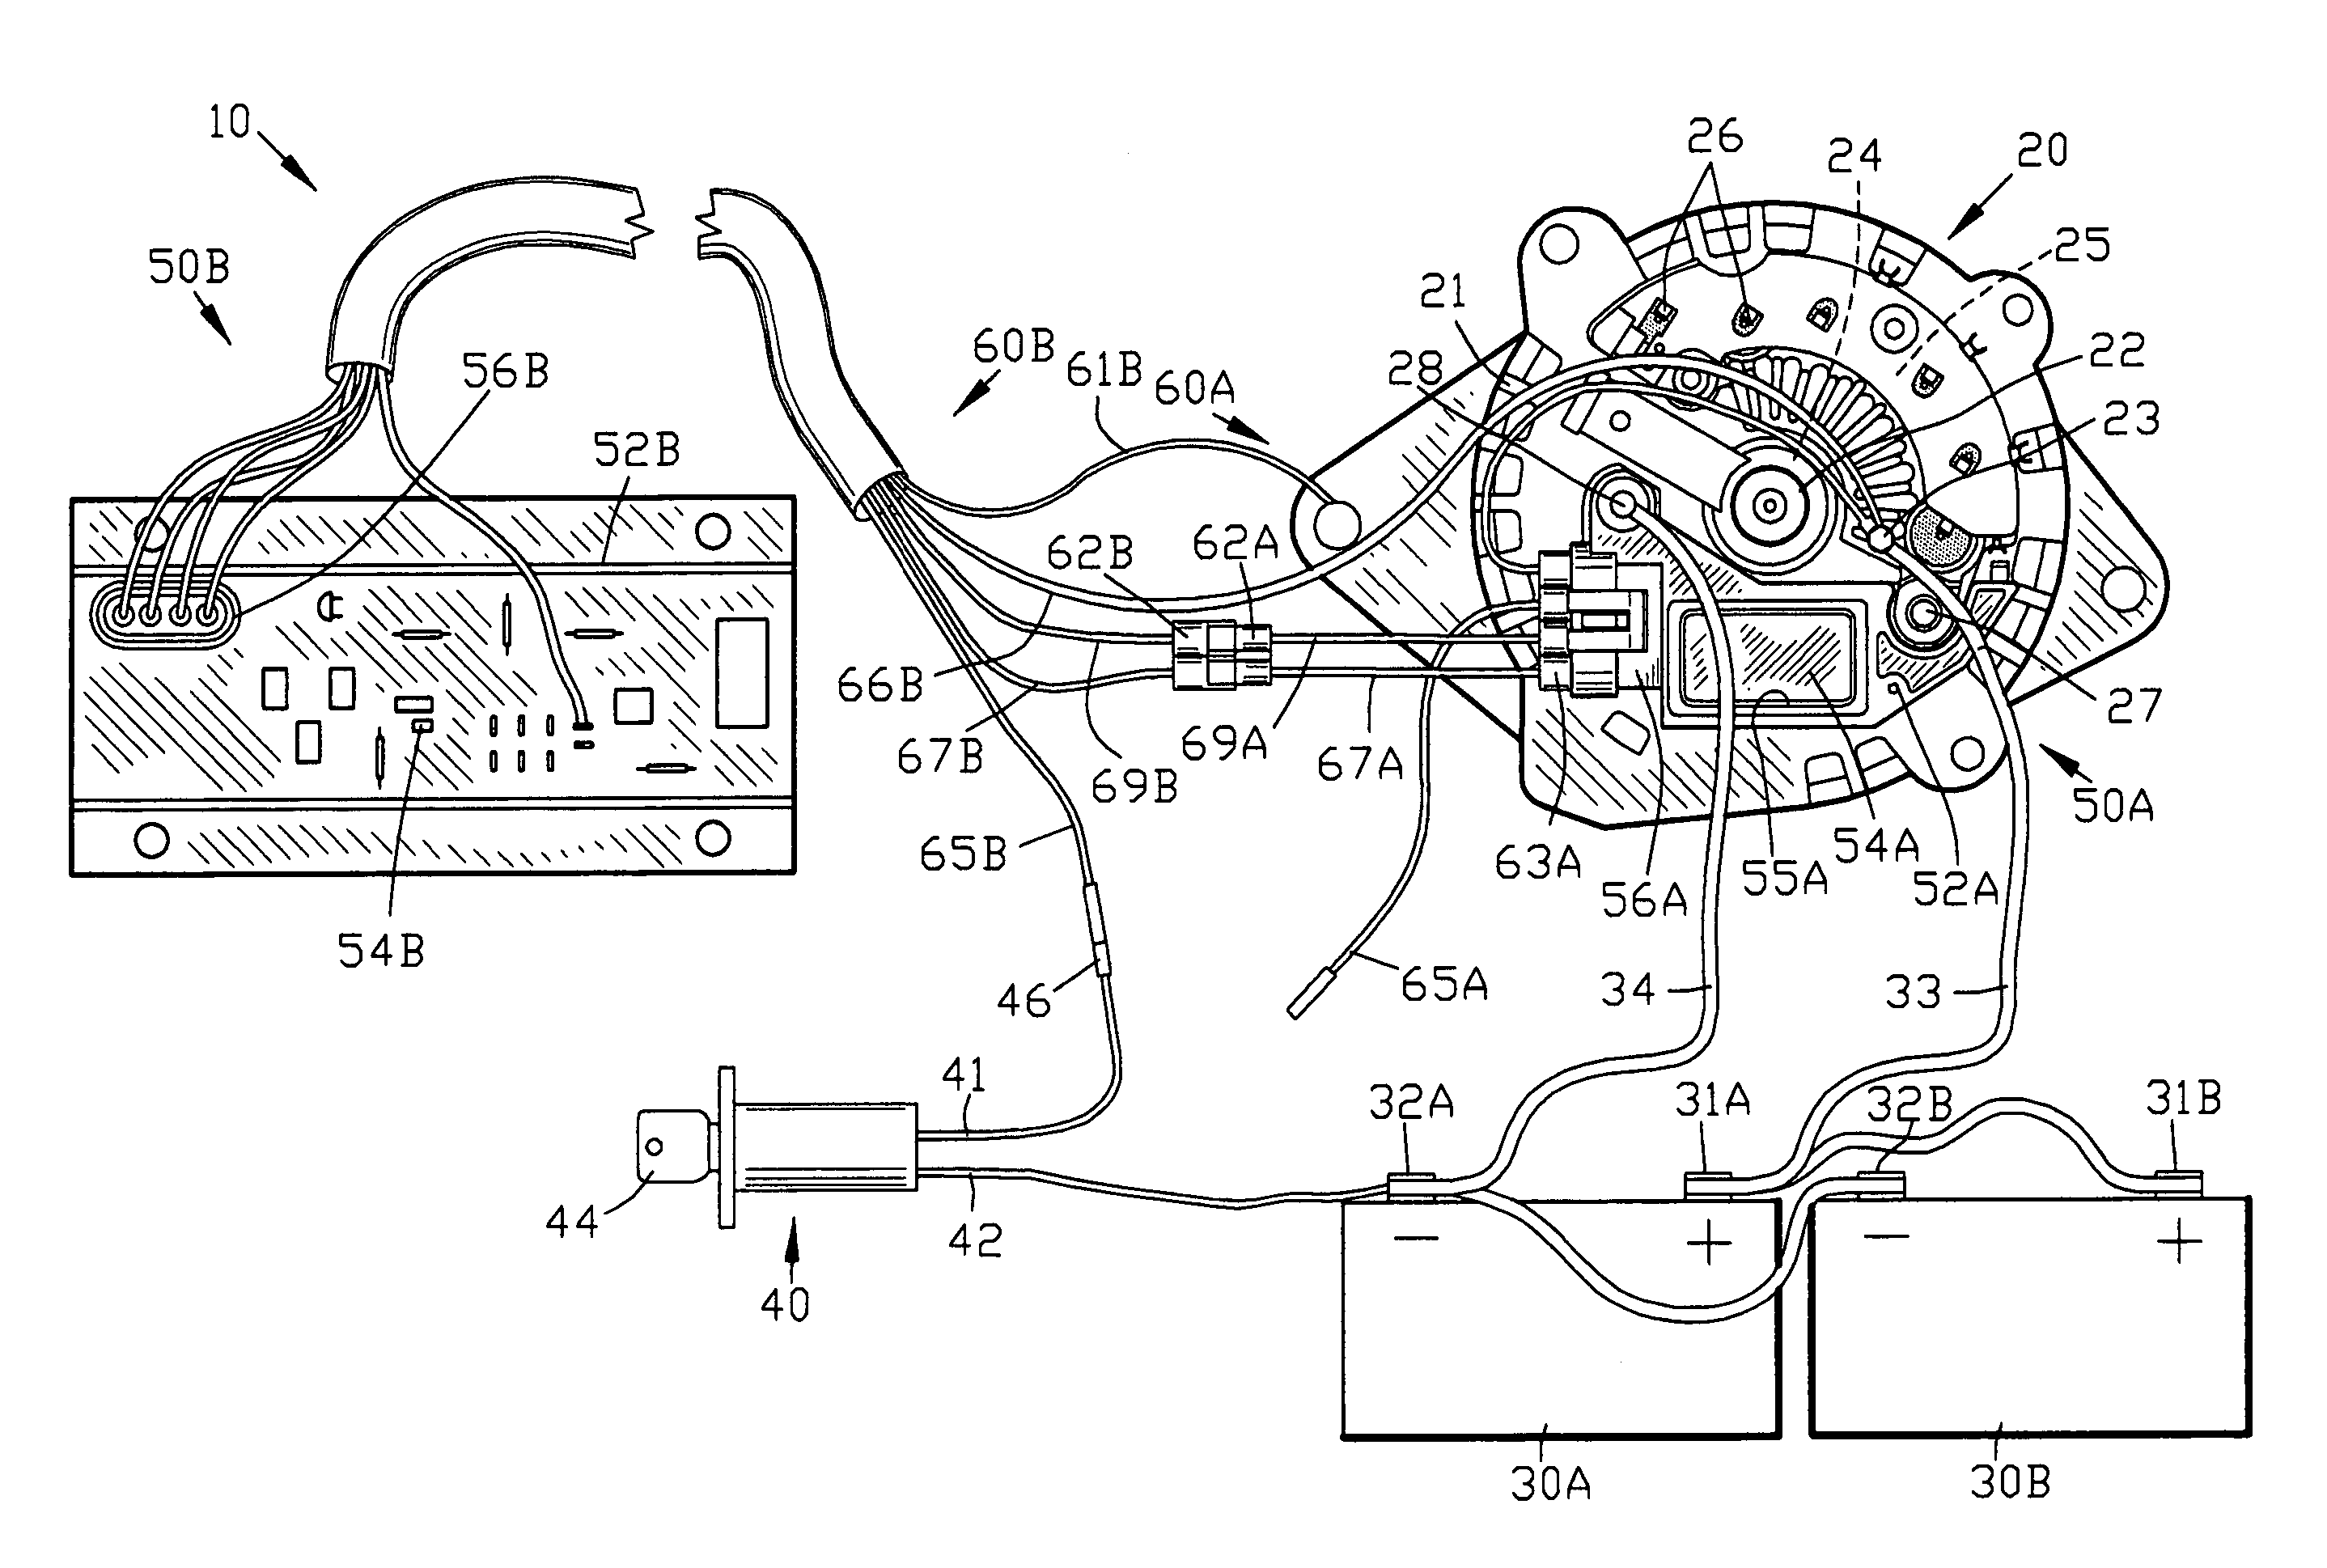 trombetta 862-1211-211-16 wiring diagram